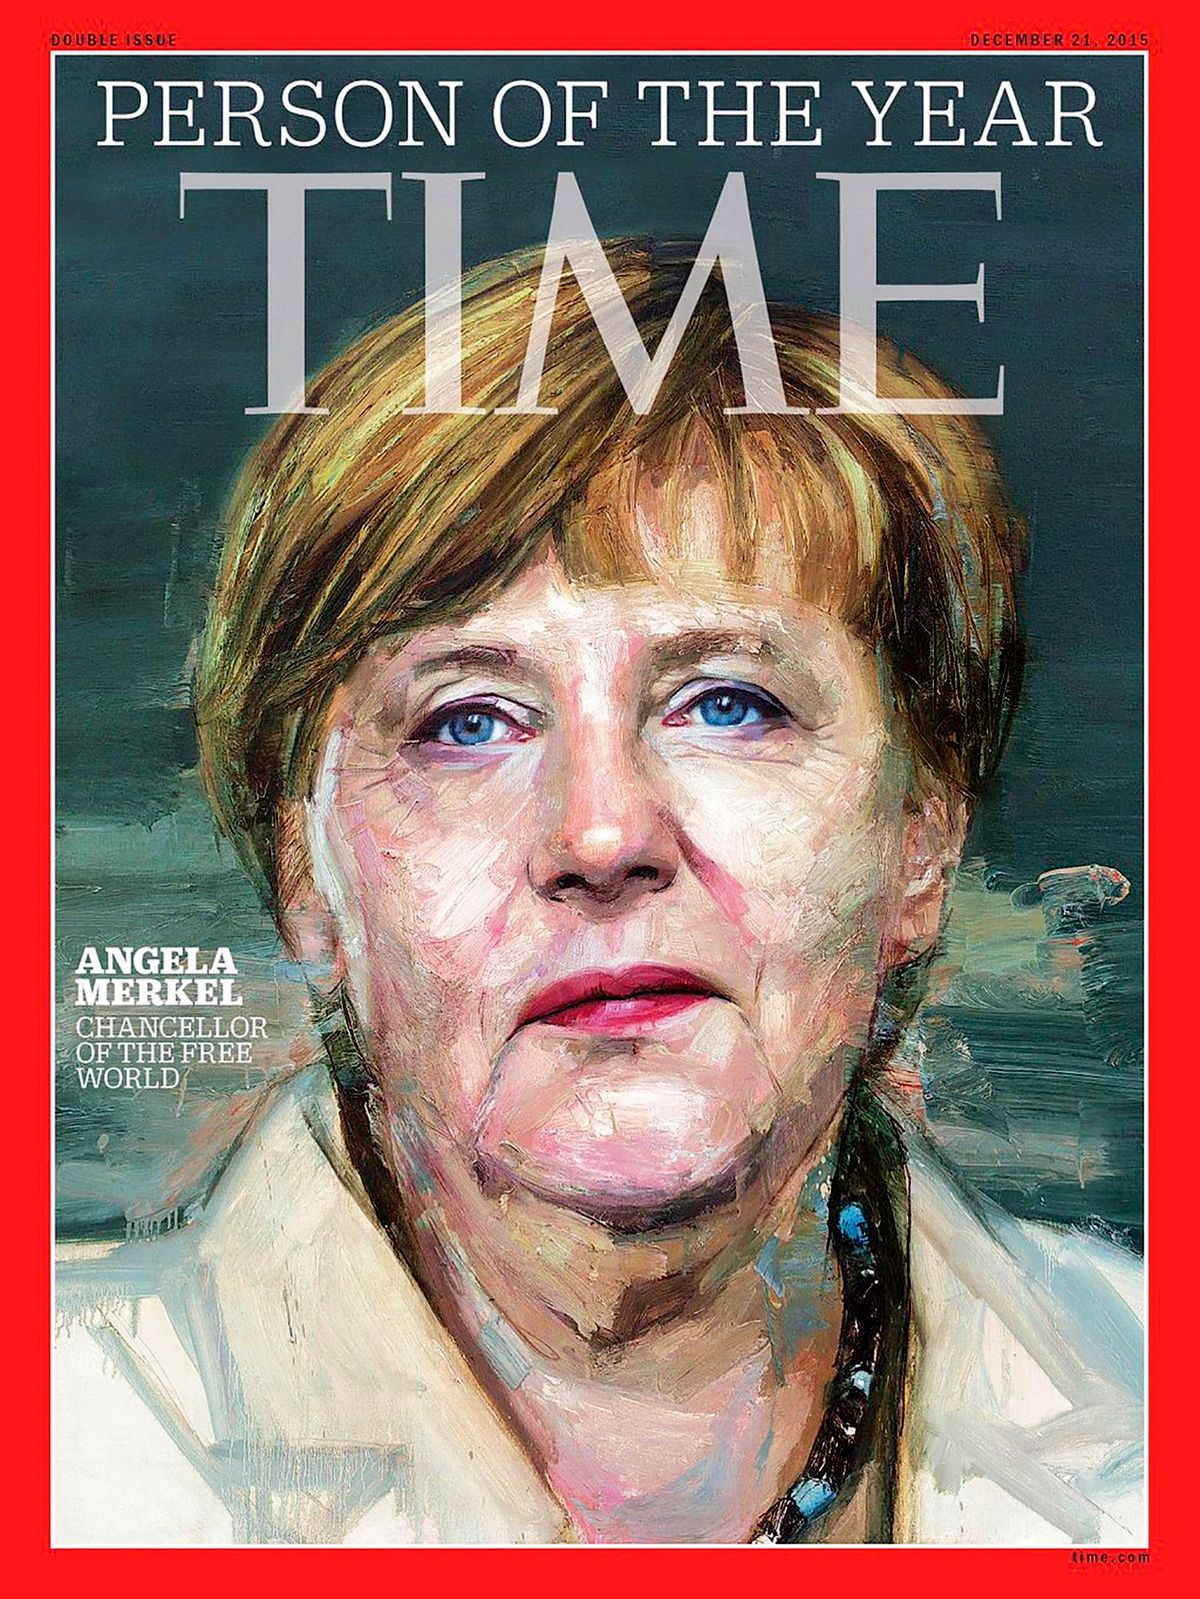 Журнал Time объявил Ангелу Меркель человеком года, 2015 г.